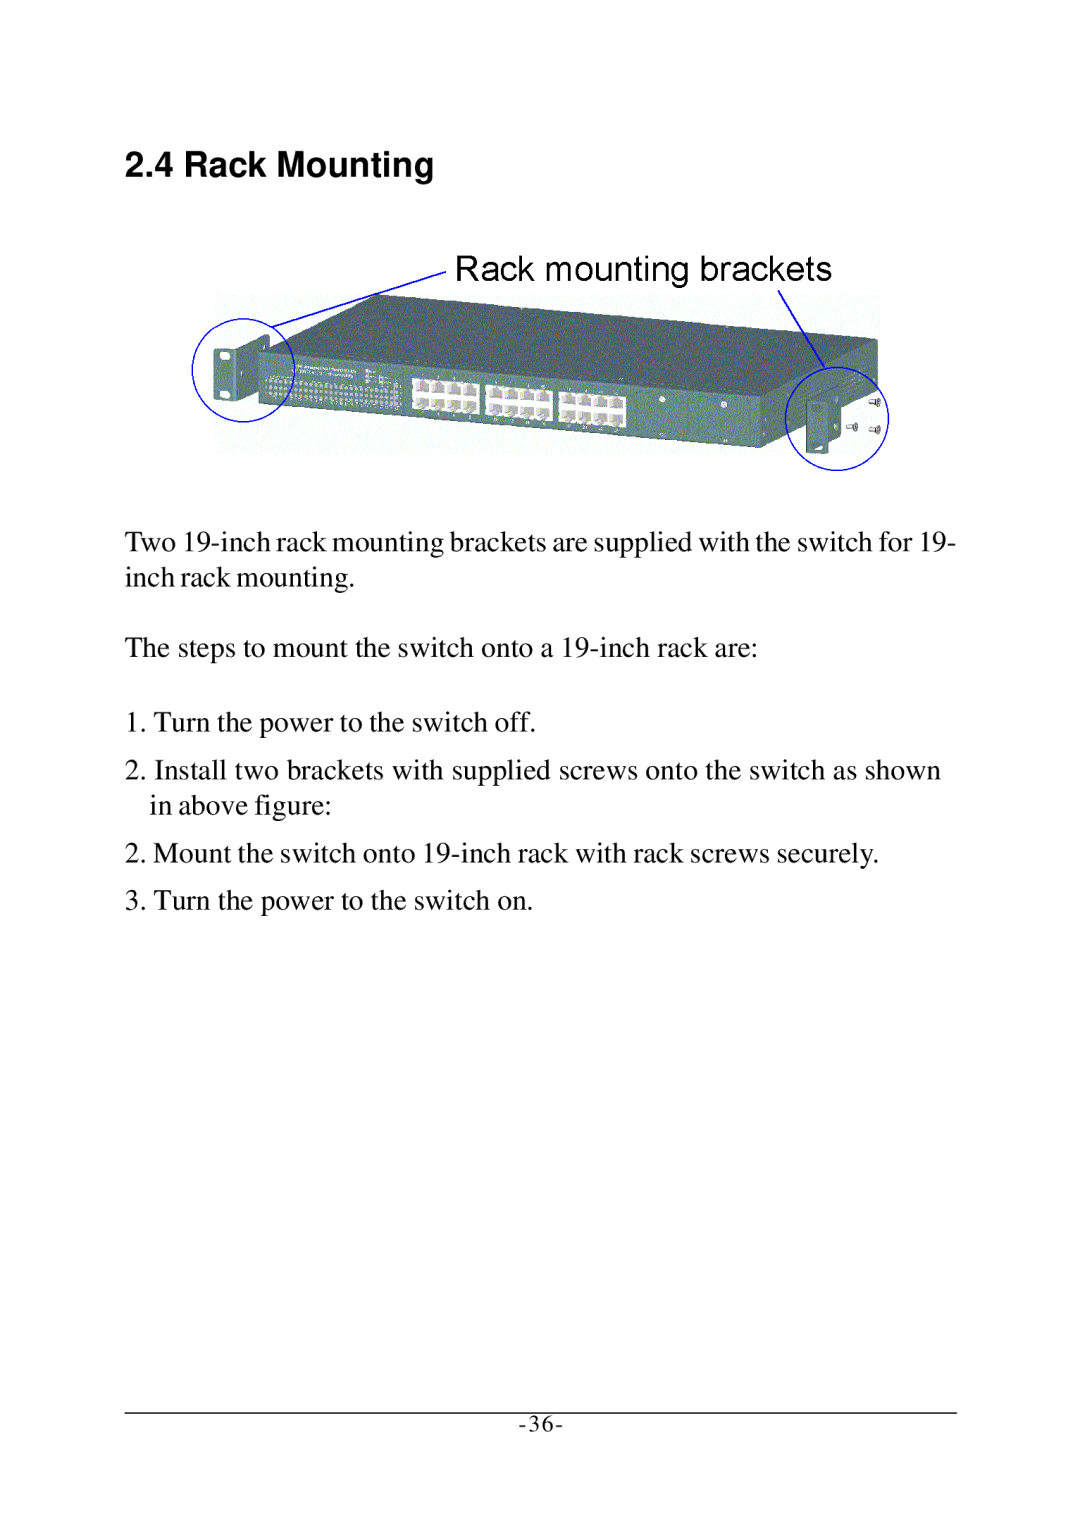 KTI Networks KS-2260 operation manual Rack Mounting 